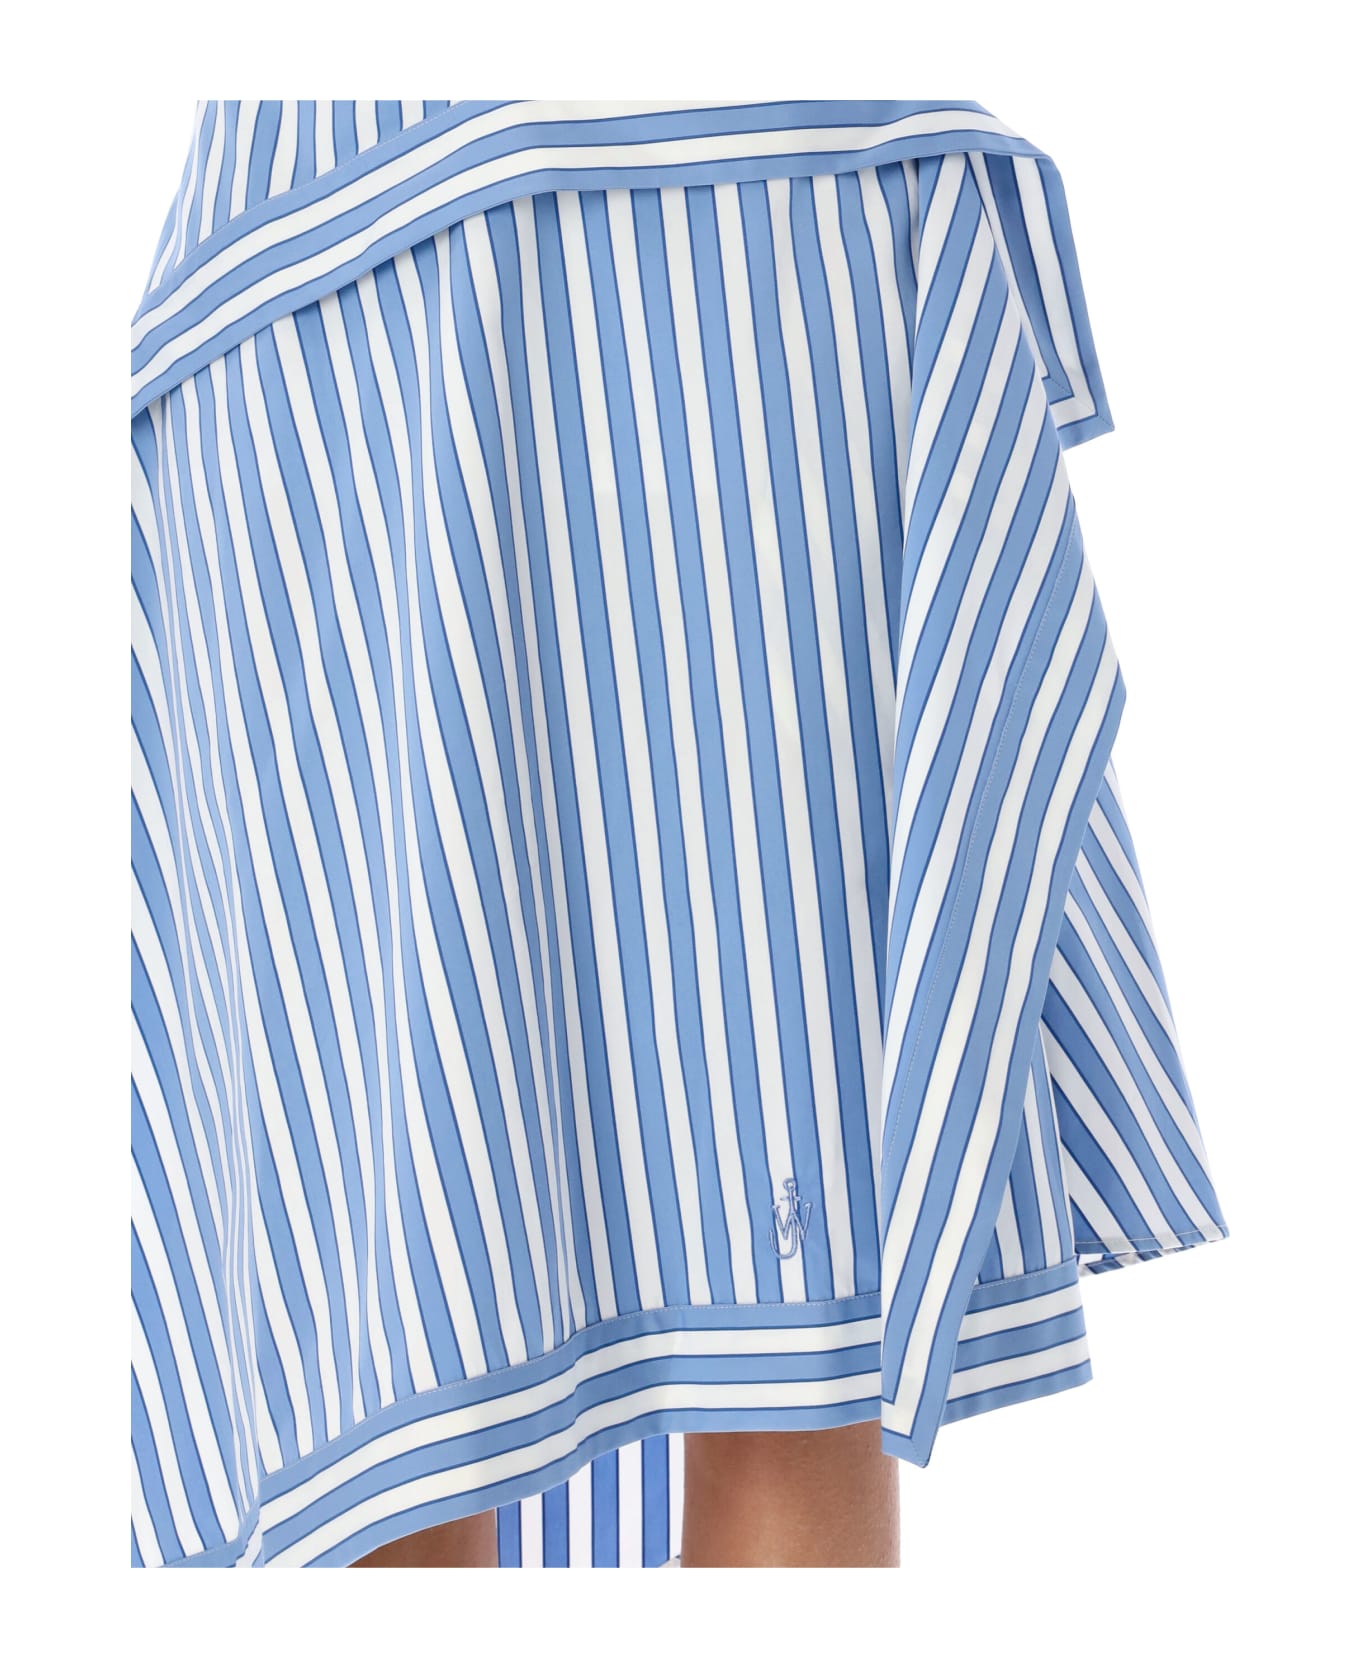 J.W. Anderson Striped Midi Skirt